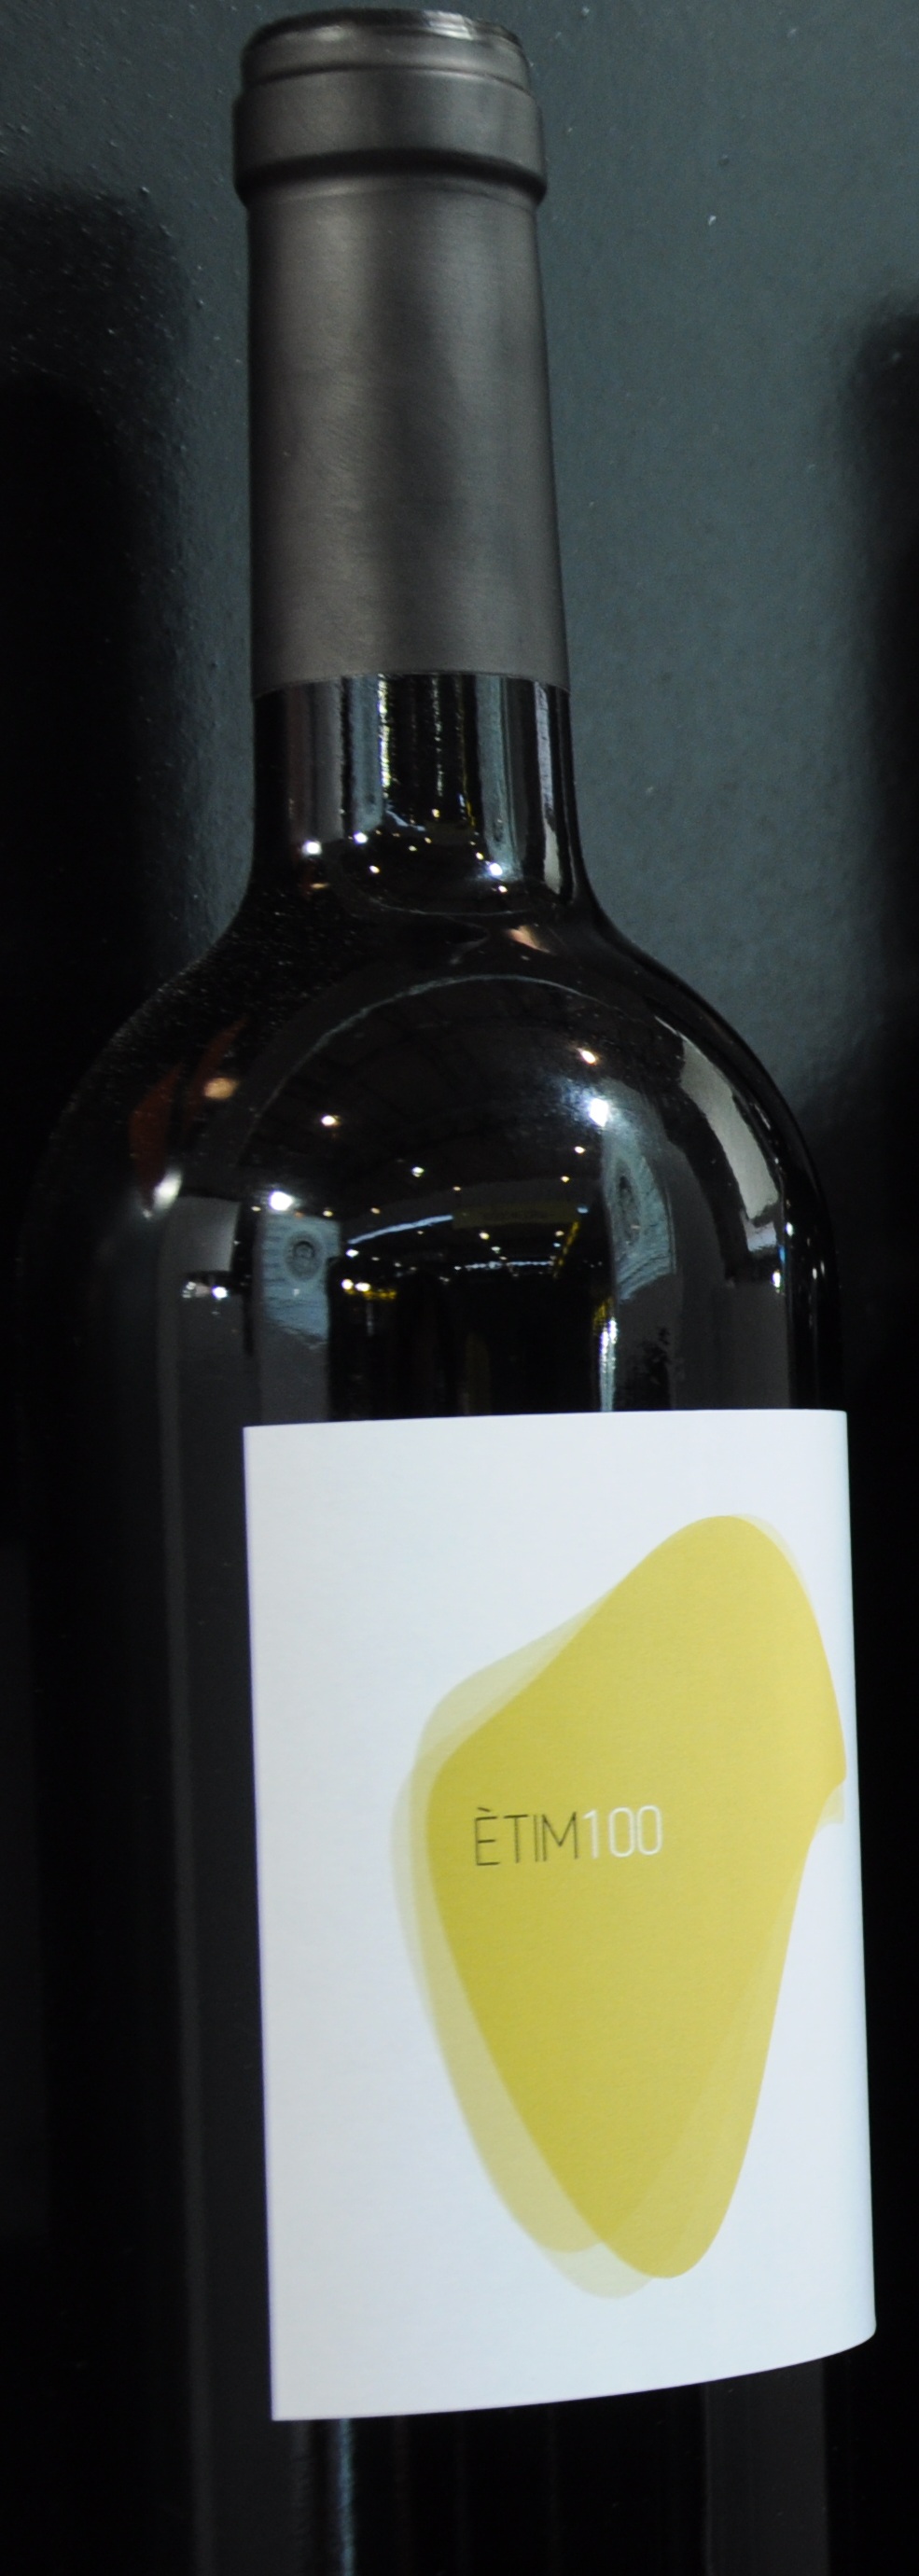 Image of Wine bottle Ètim100